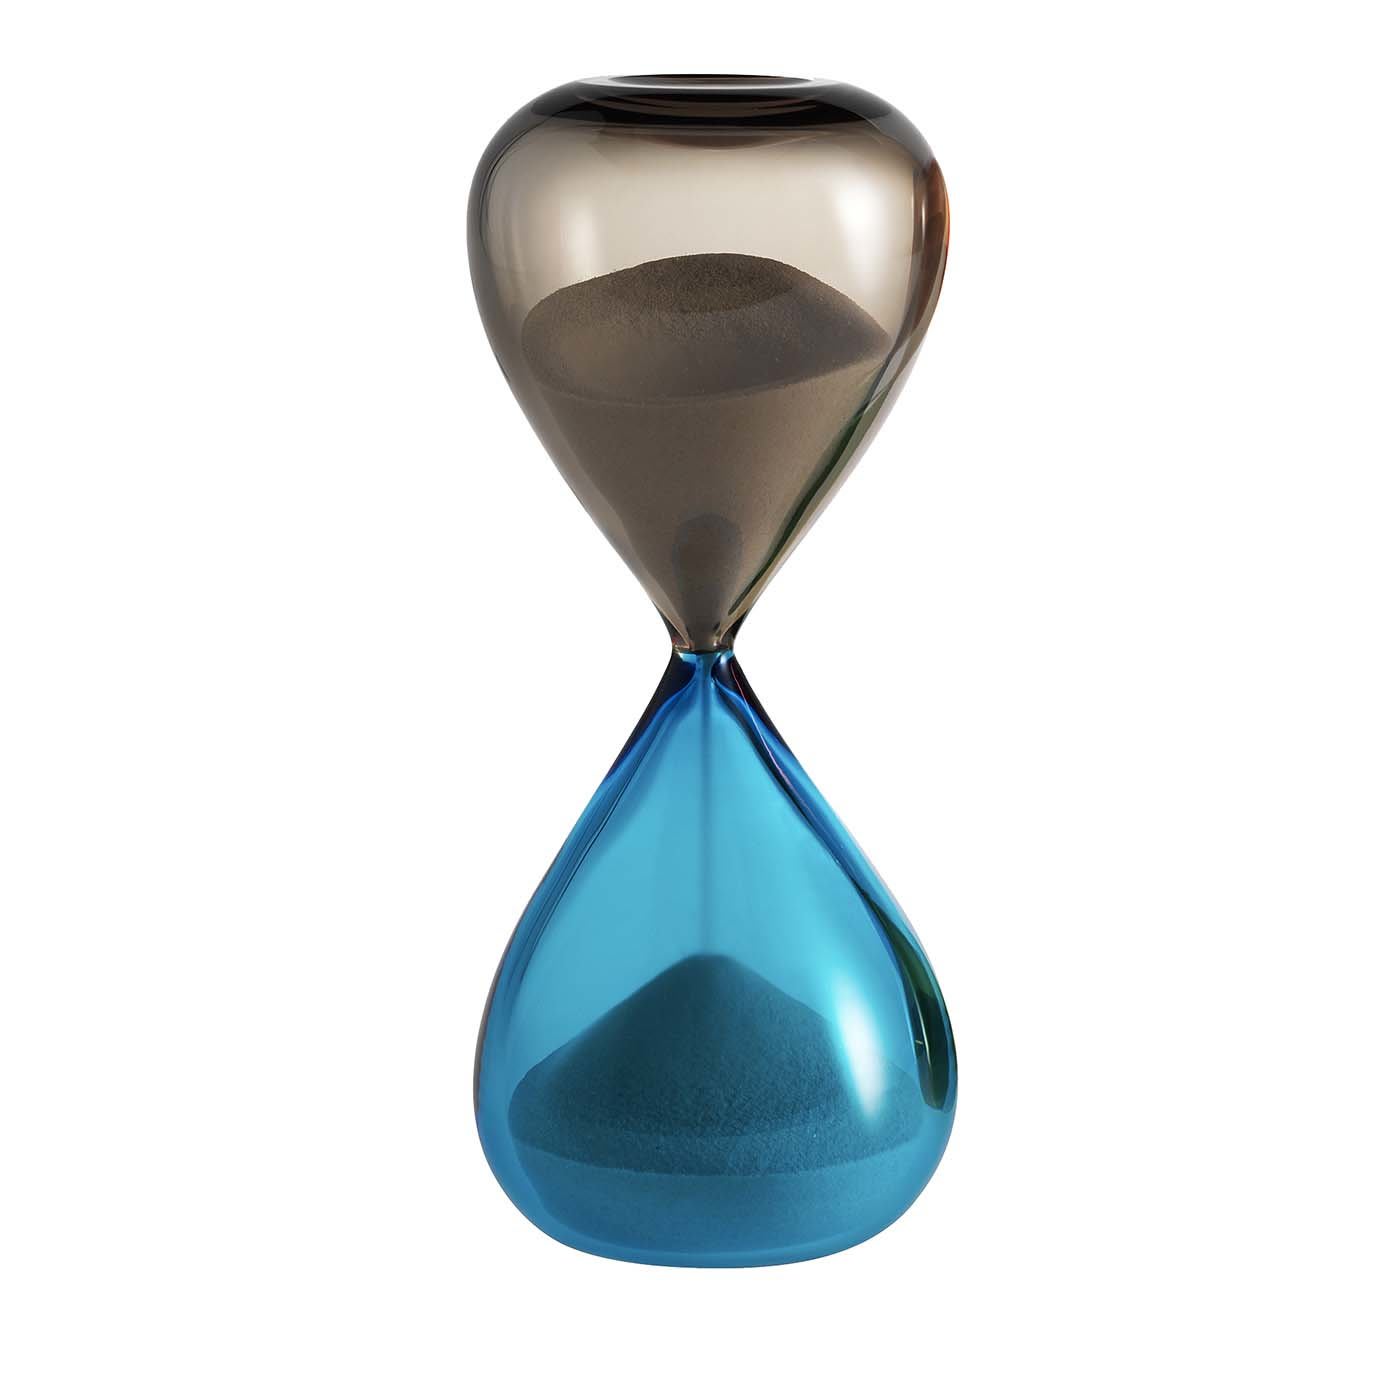 Clessidre Smoky/Aqua Hourglass by Fulvio Bianconi - Venini